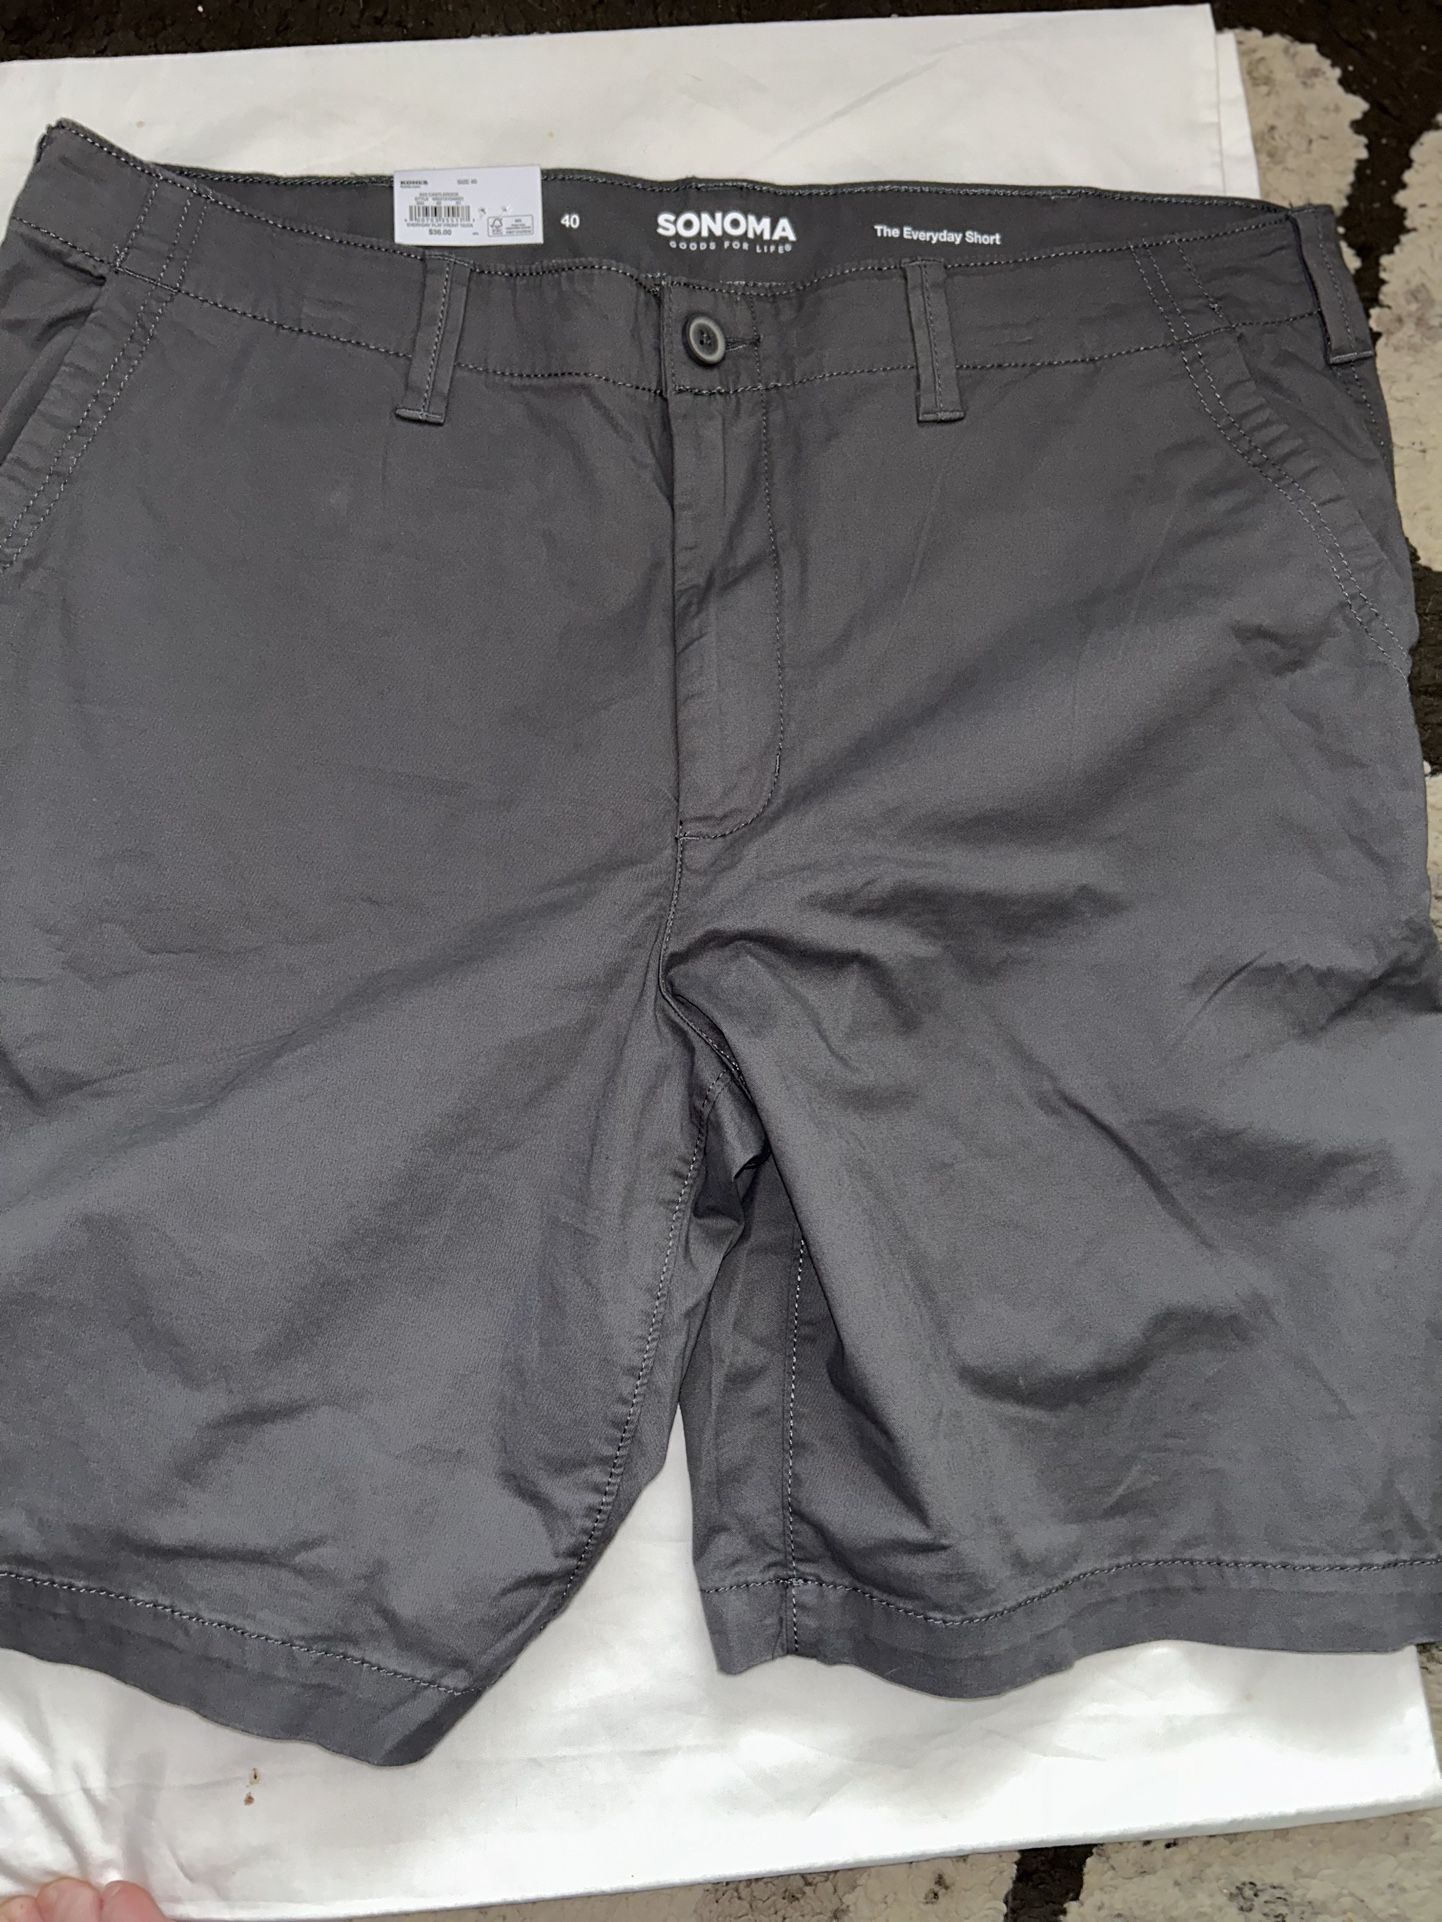 Flat Front Shorts Men’s Size 40 Sonoma  Brand Men’s Shorts 